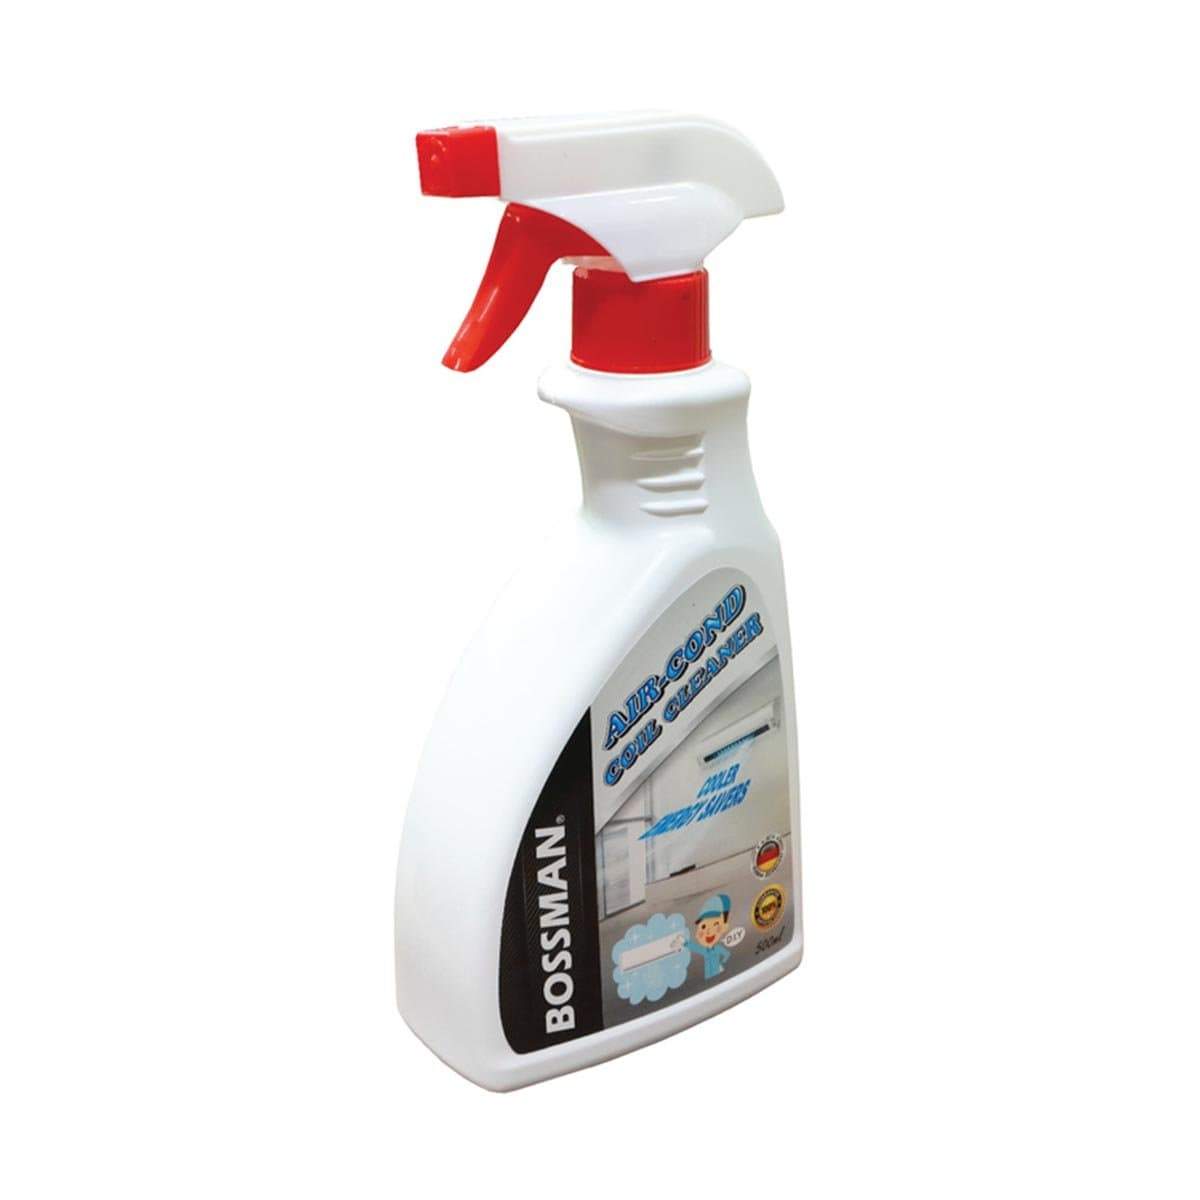 BOSSMAN Air-Conditioner Cleaner Spray 500ml | OfficePlus